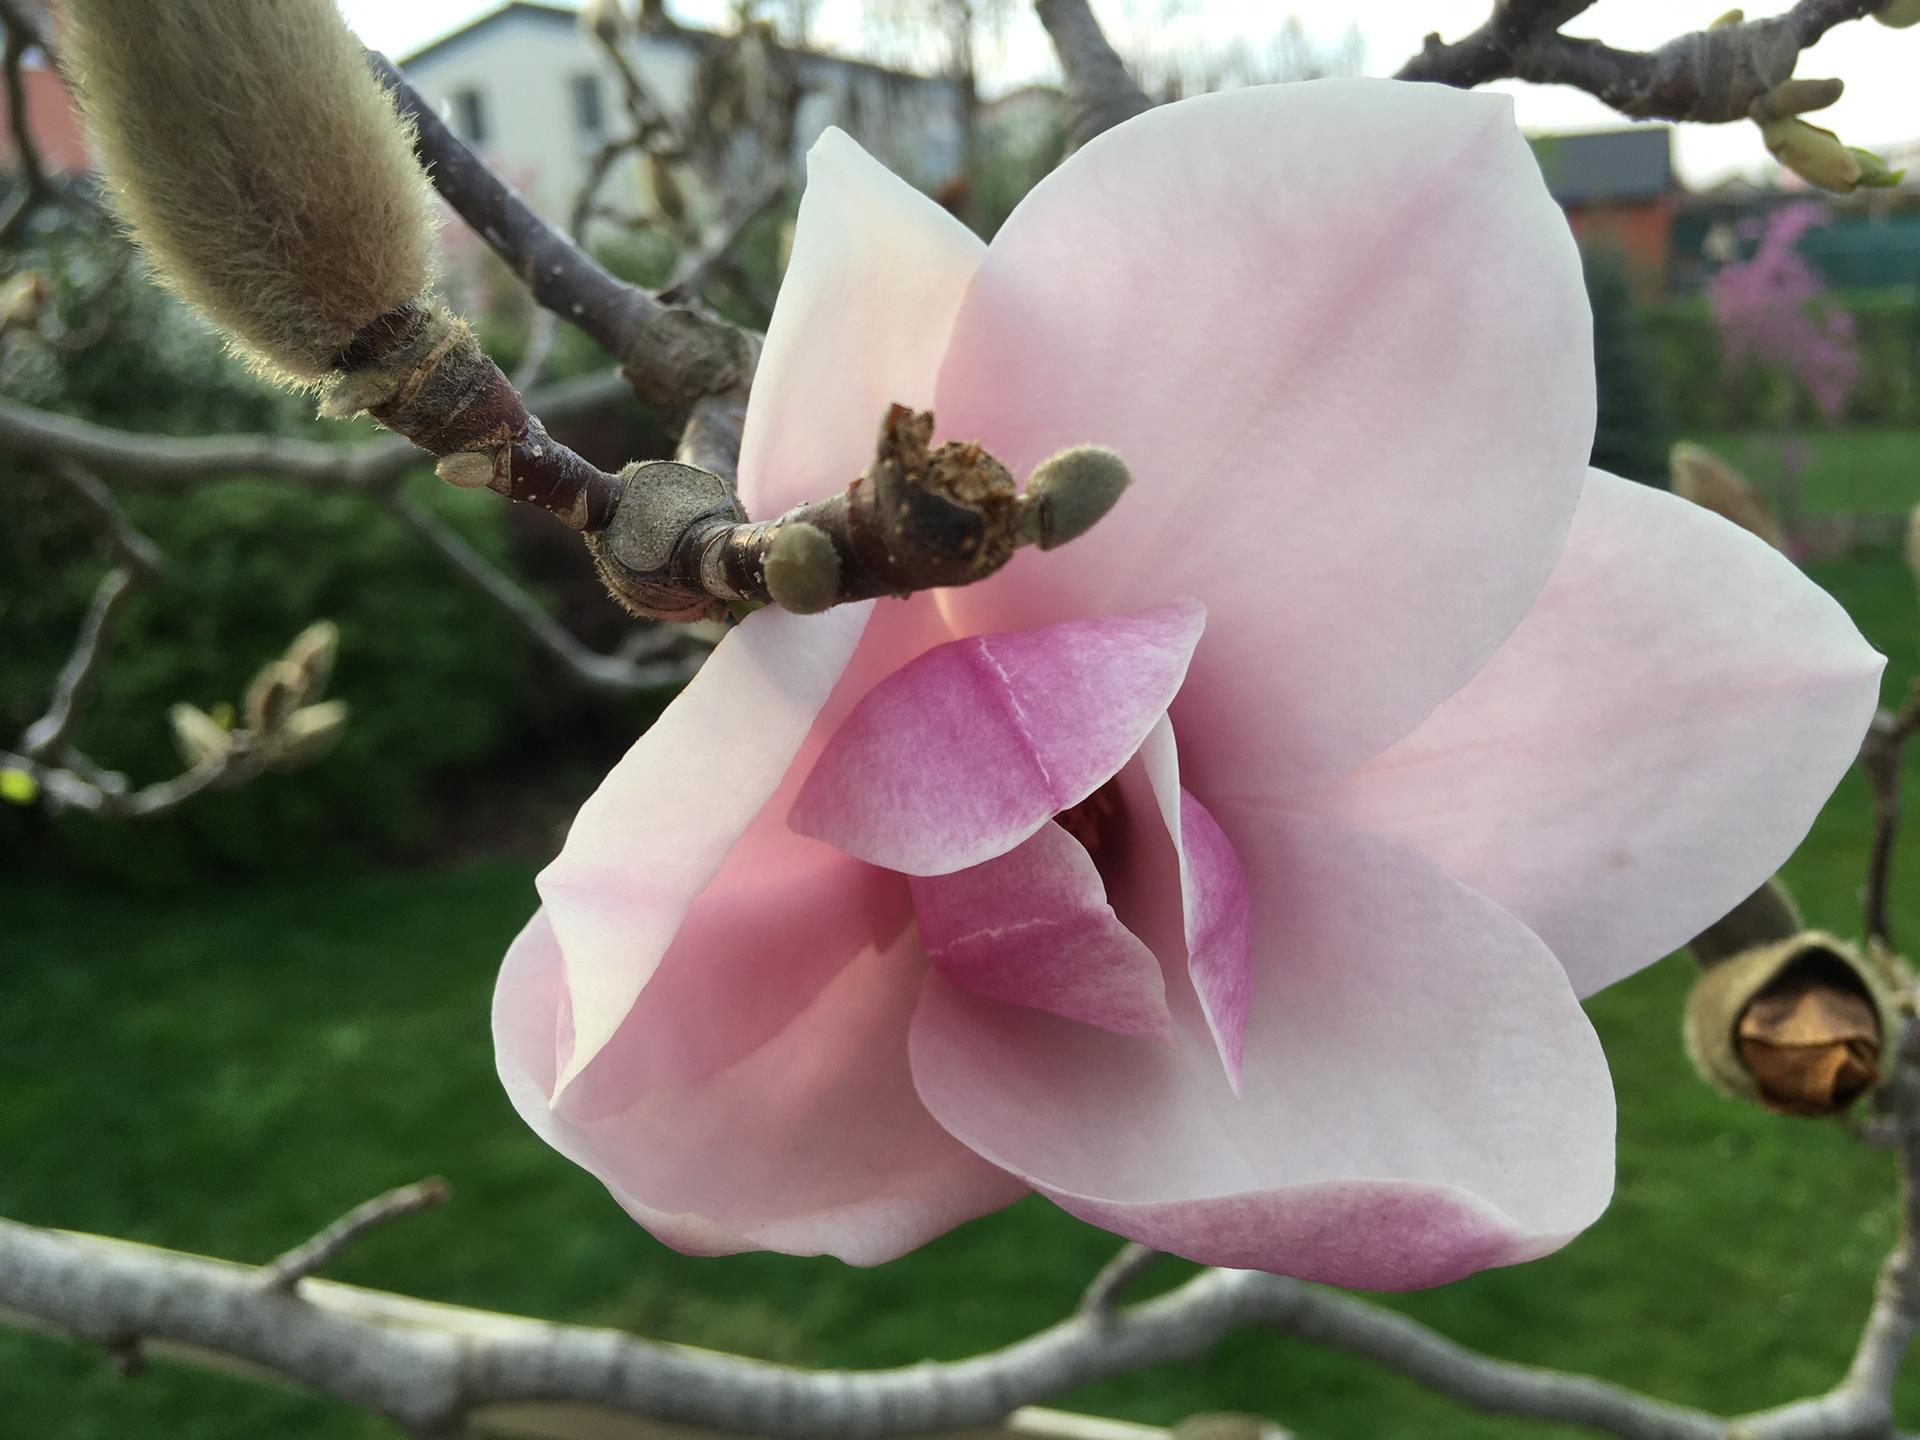 Zahrada 2020 - magnolie je letos silny individualista- misto zaplavy stovek kvetu, ke kterym mela silne nakroceno, se na posledni chvili rozhodla predvest jen zhruba 5 a ostatni si nechat spalit mrazem. Nu coz, aspon tem prezivsim hrdinum patri veskera slava!